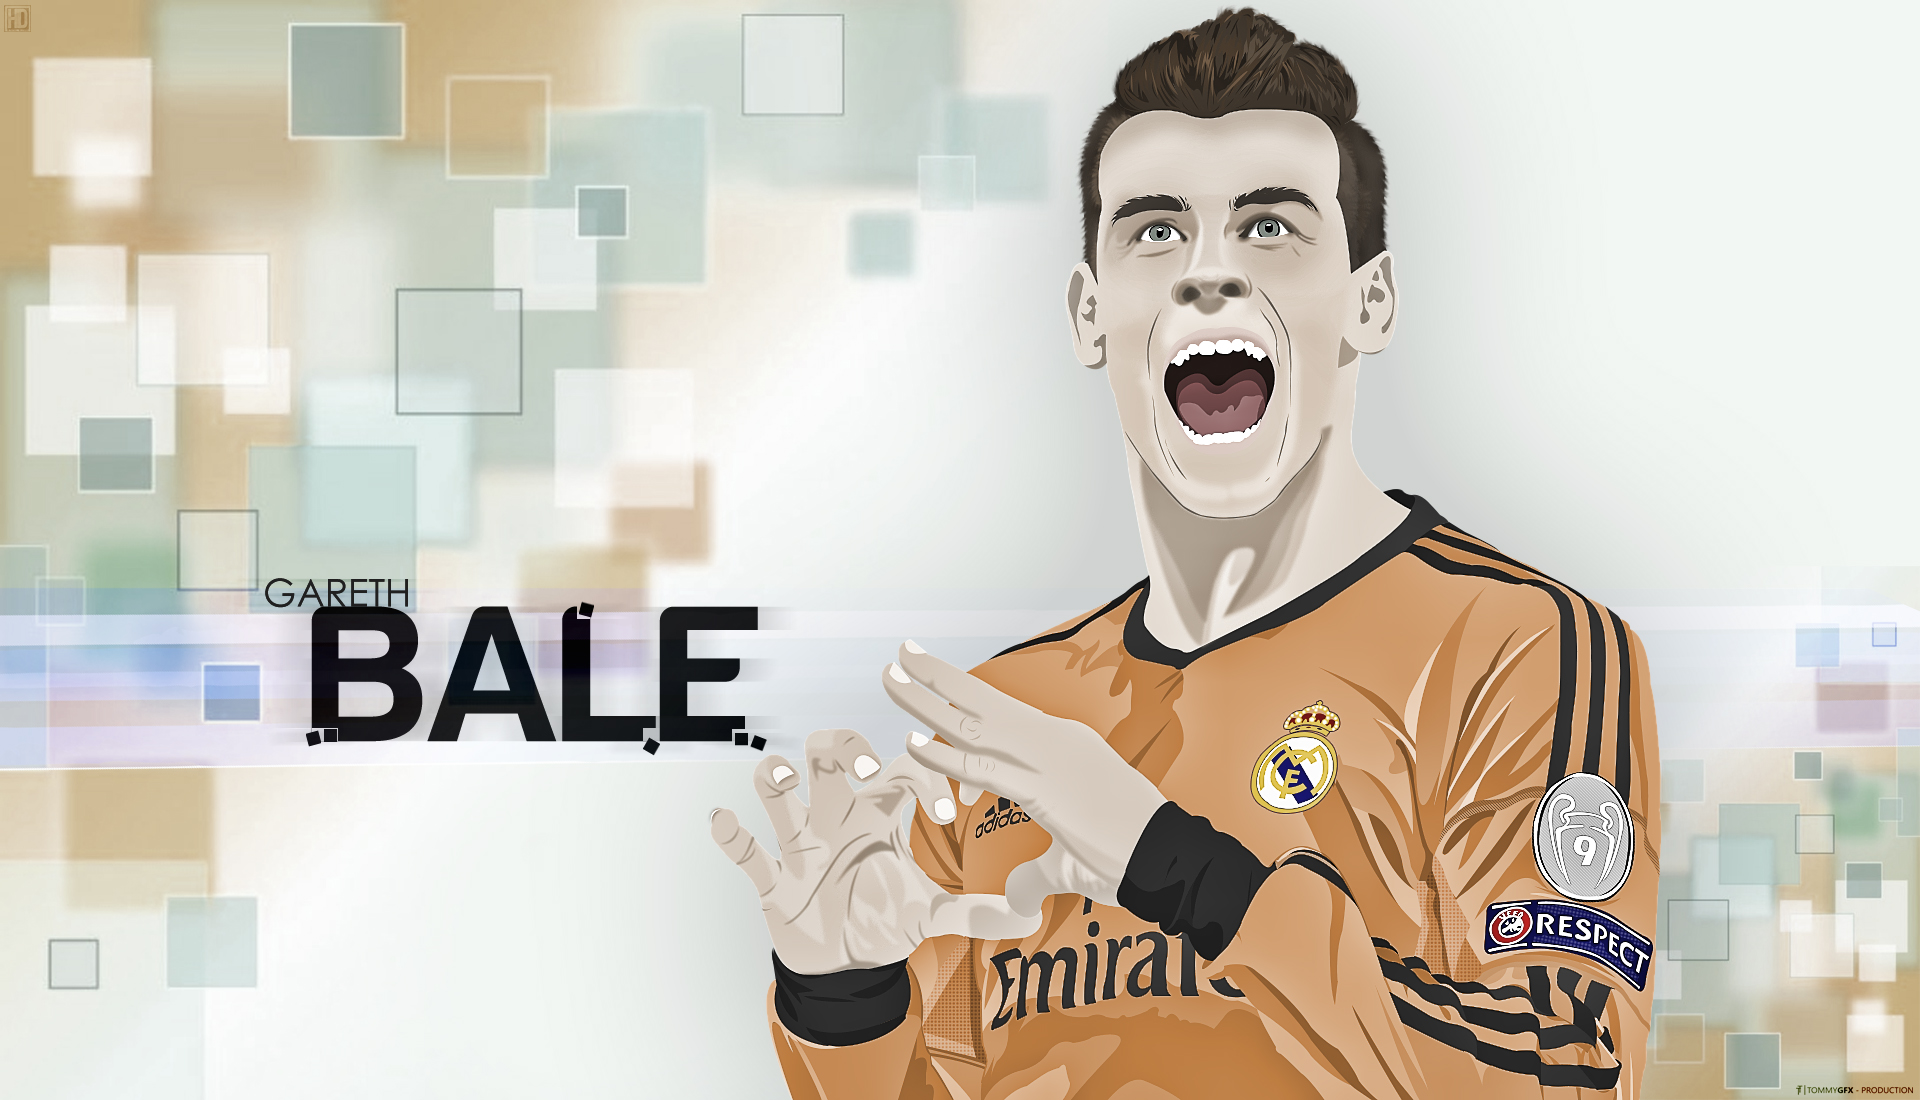 Gareth Bale The Incredible Welshman